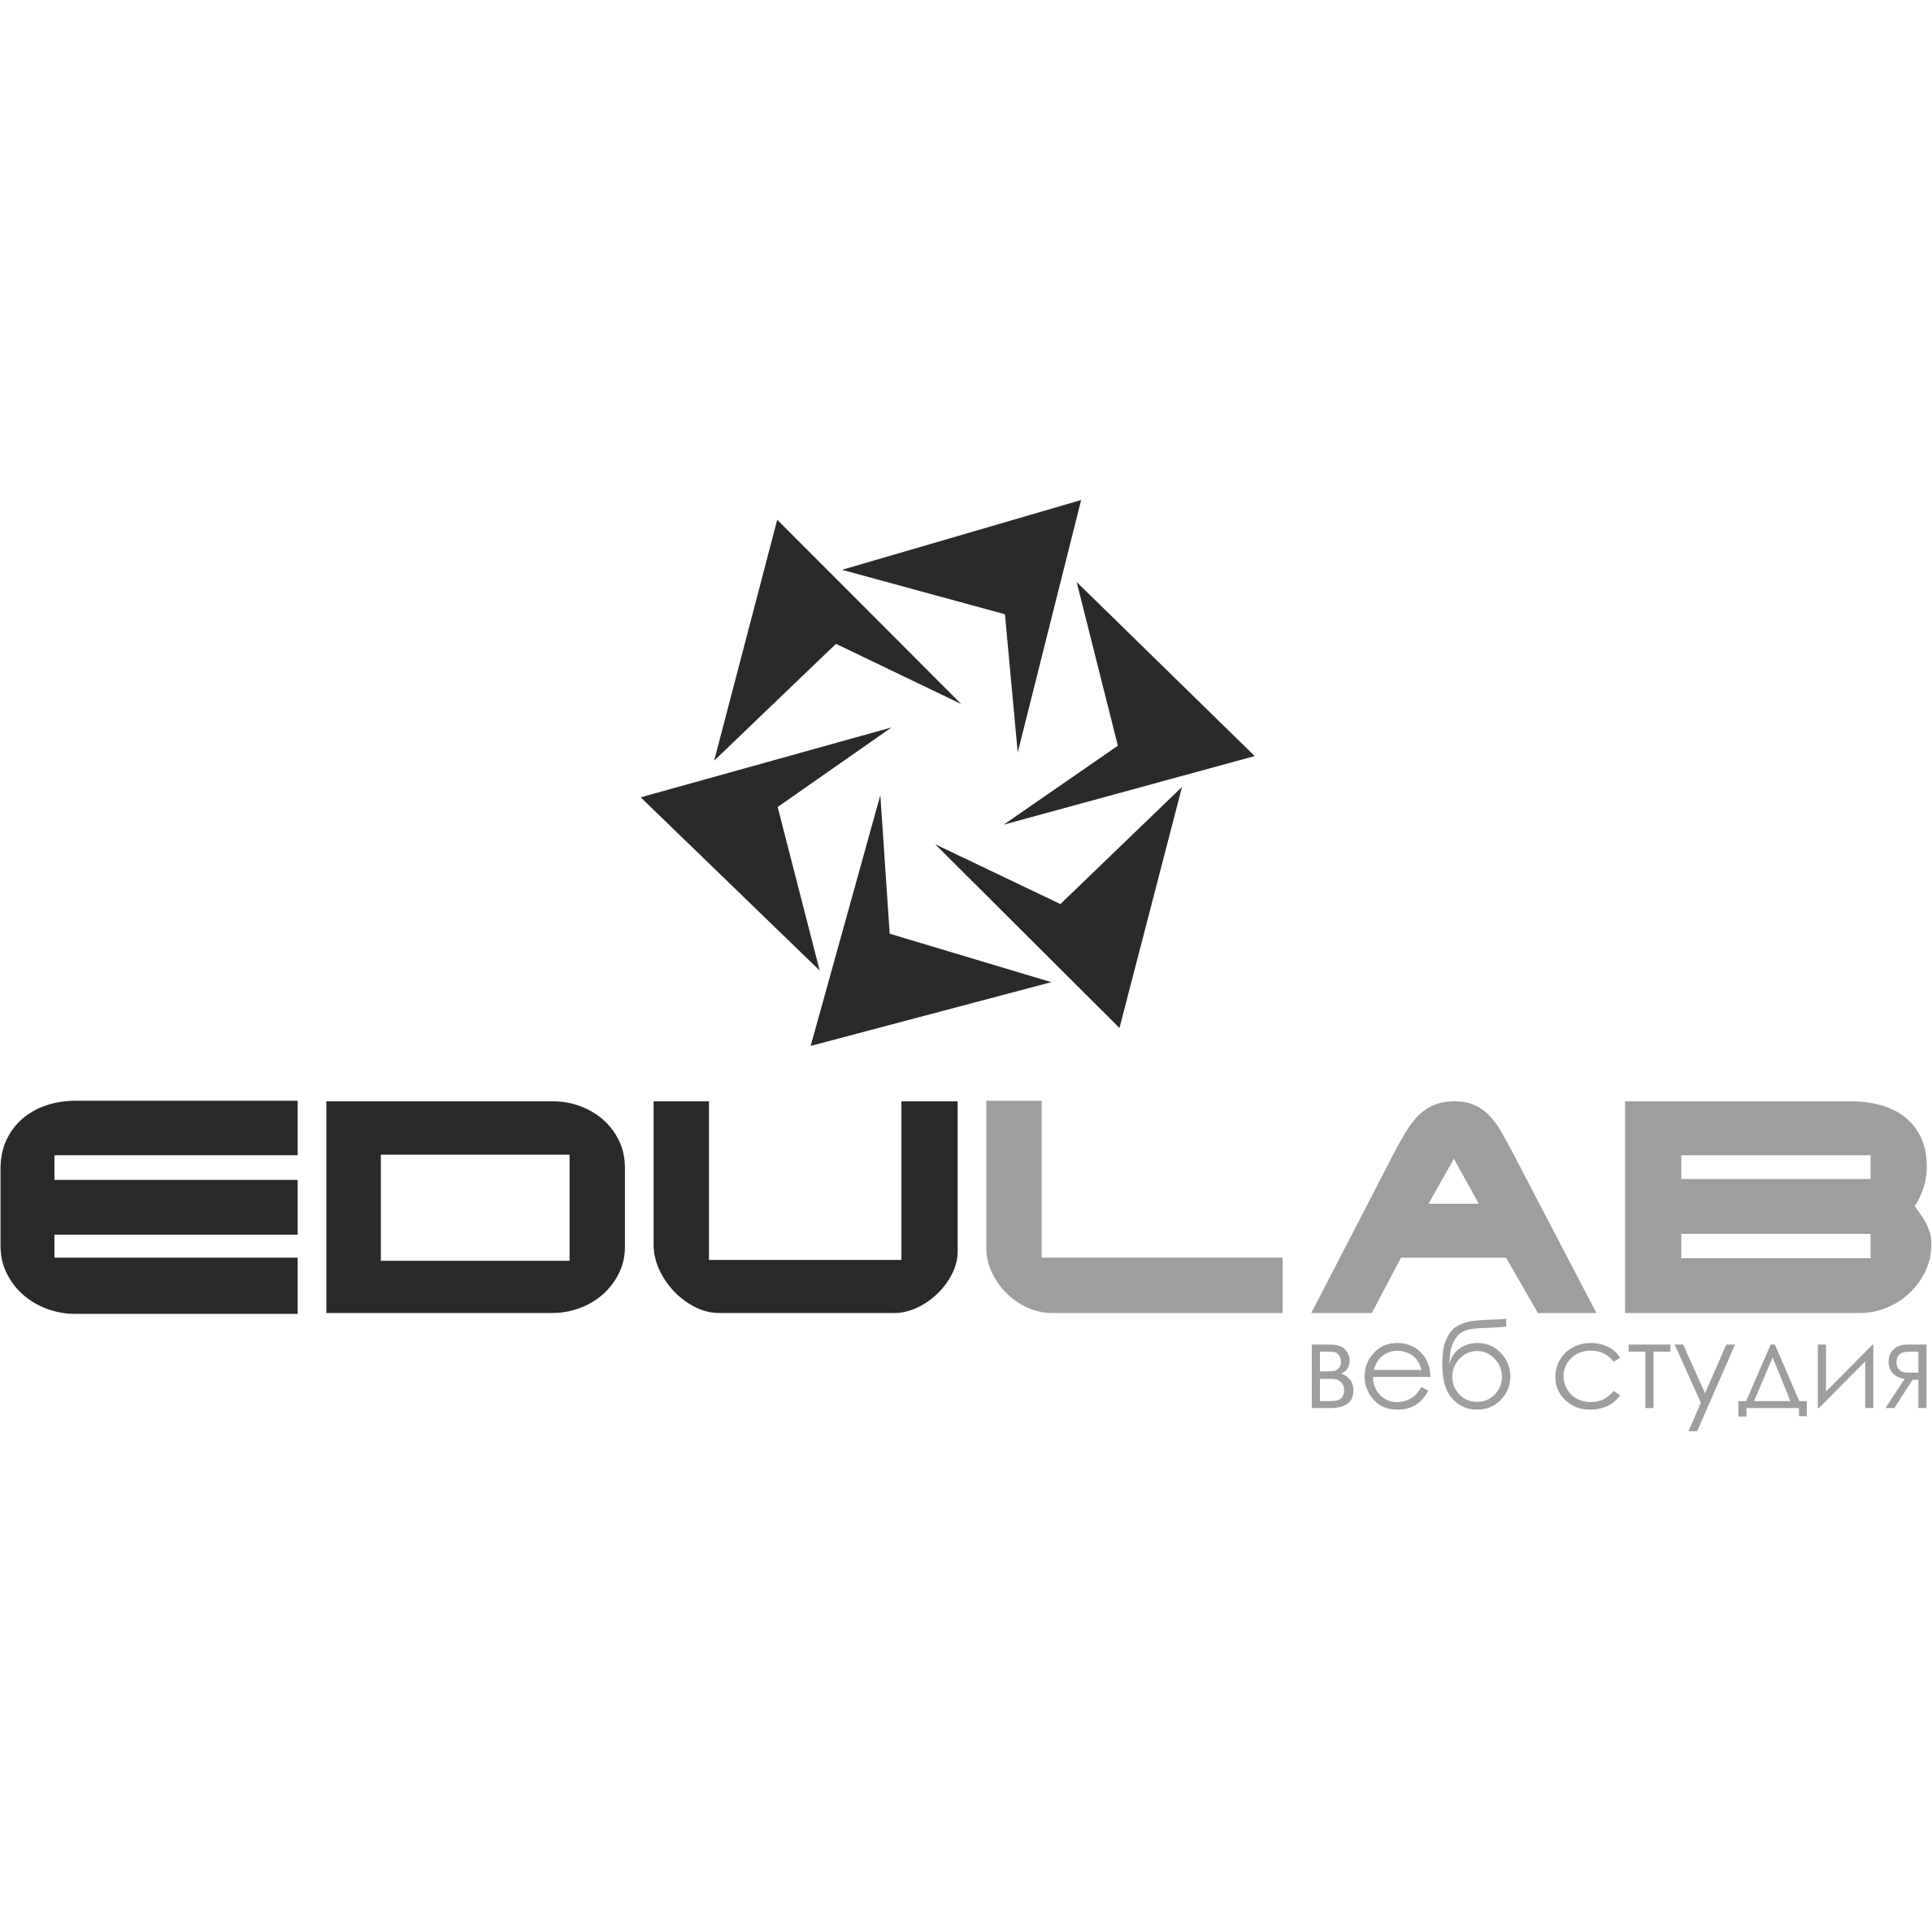 Веб-студия "Edulab"